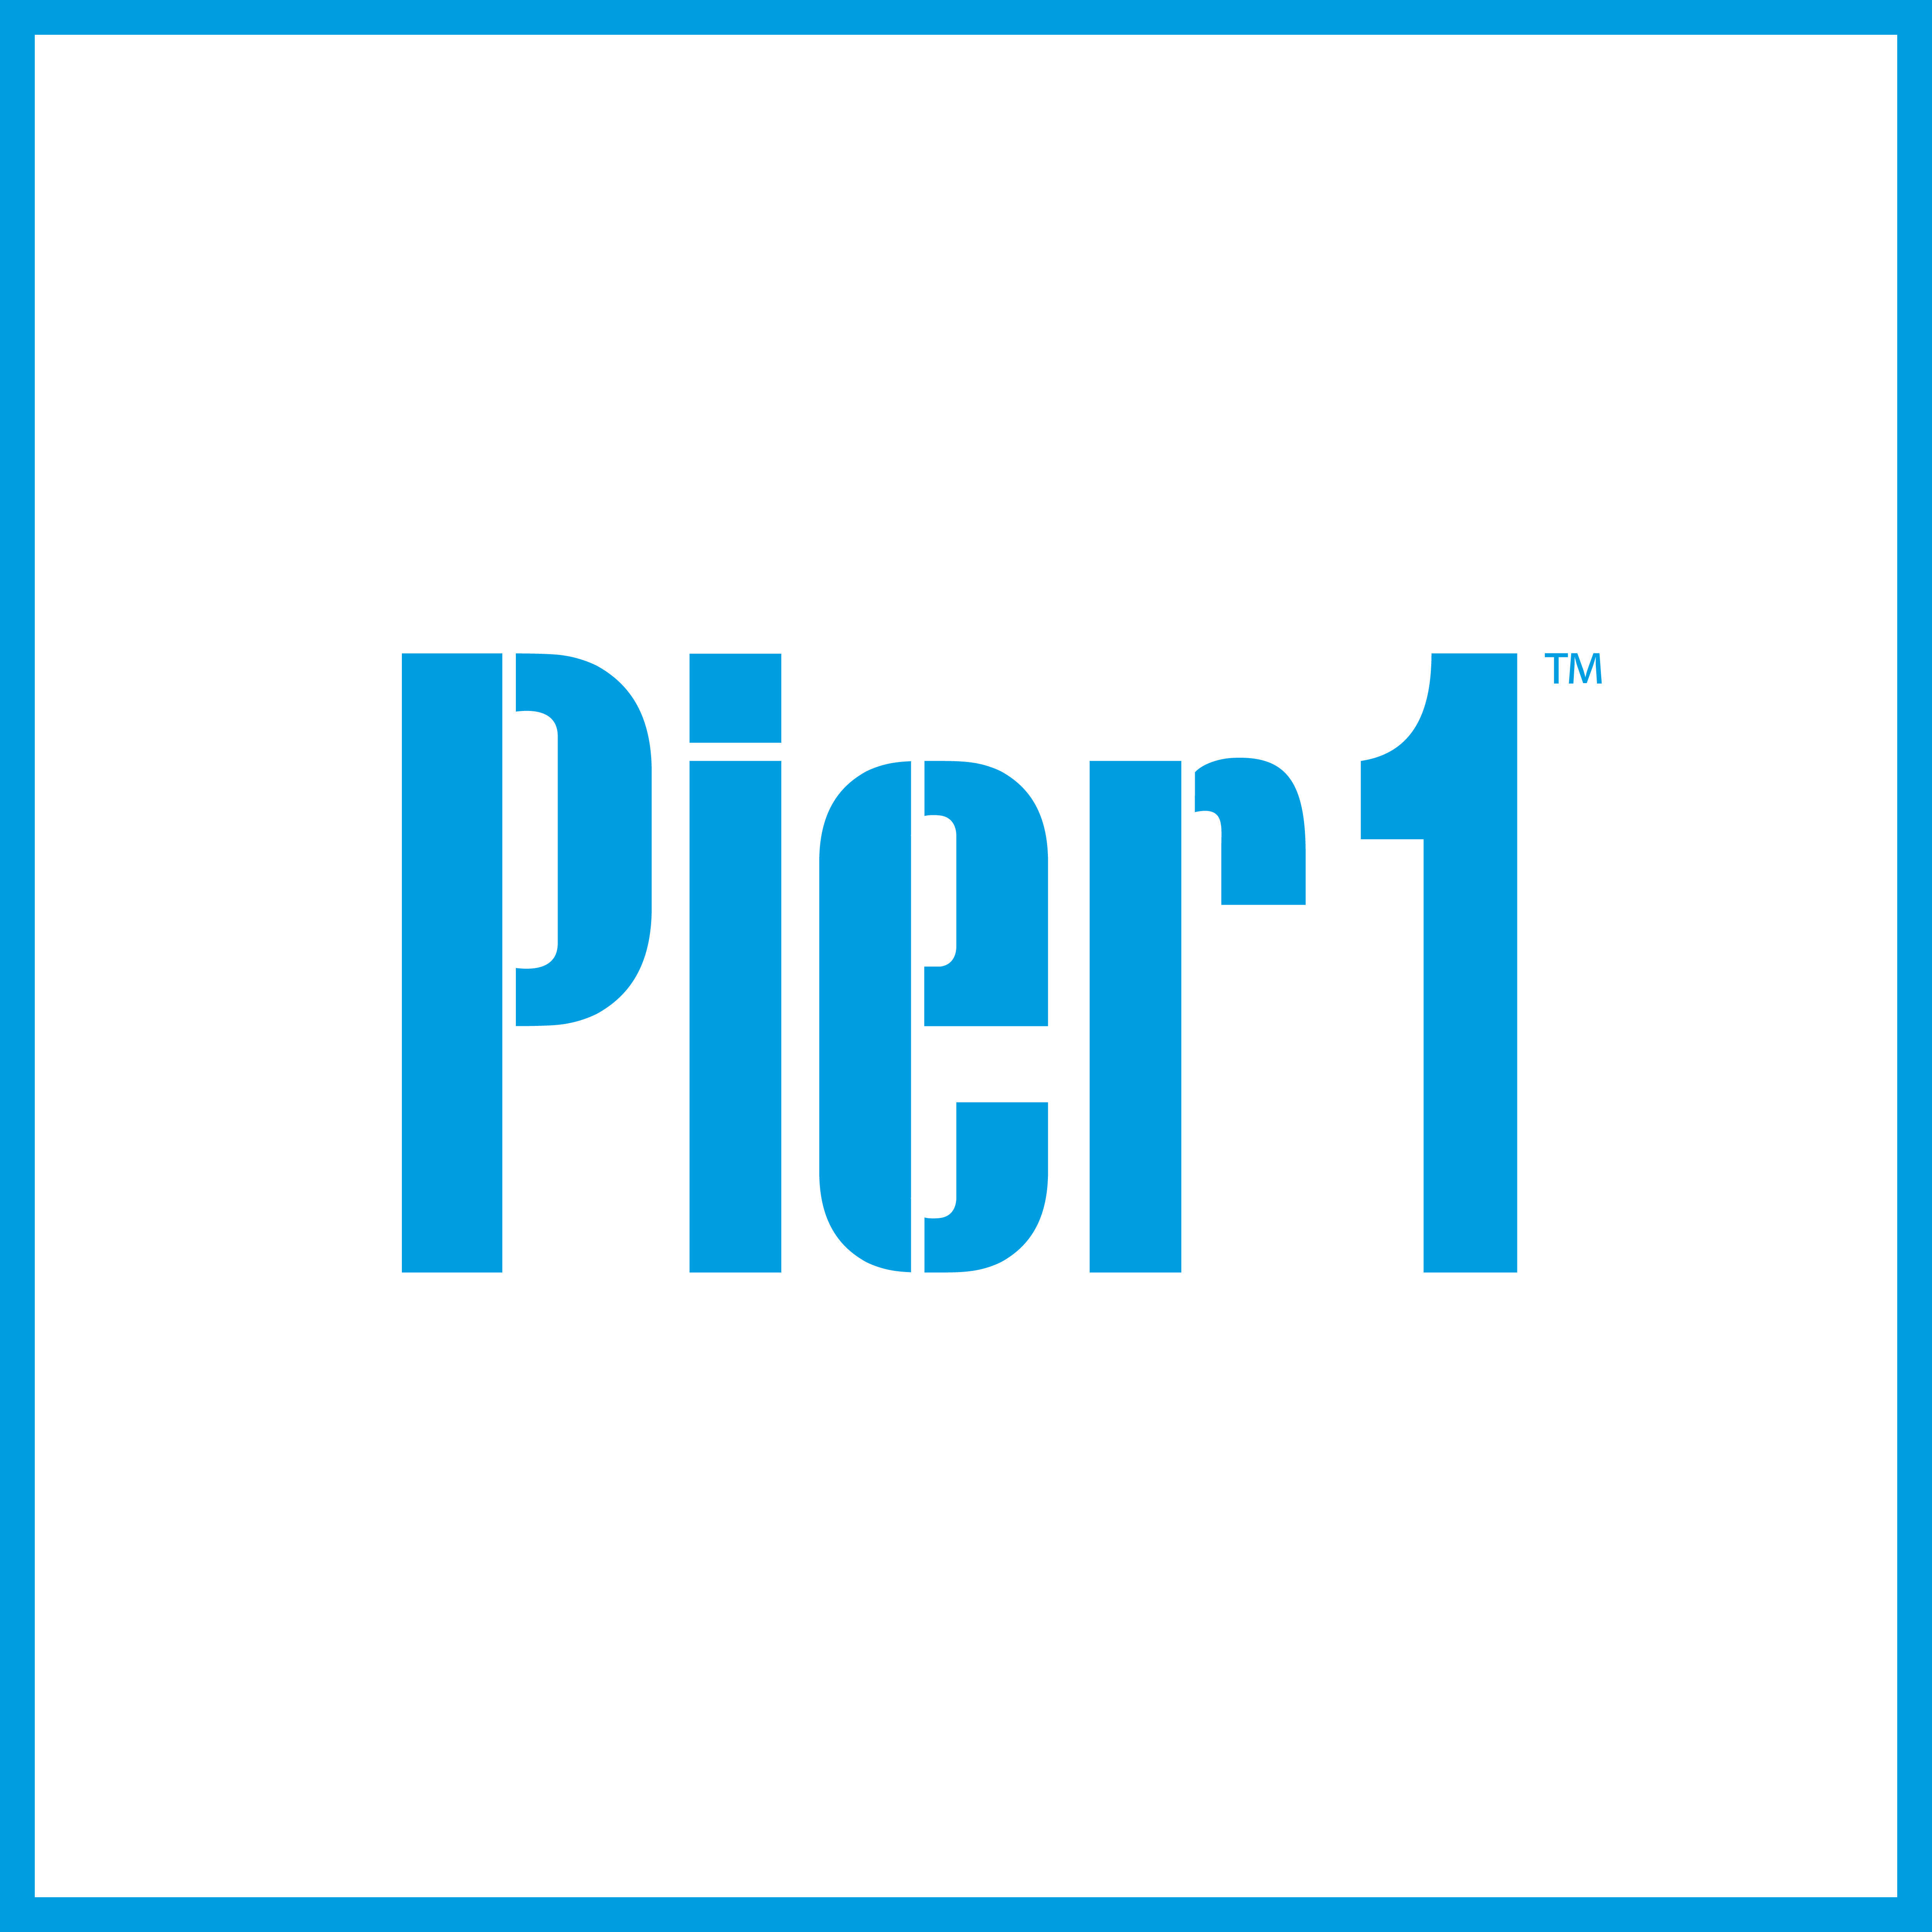 Import first. Pier 1 Imports. Pier one logo. Pier 1 Imports 1975586. Polim Pier logo.